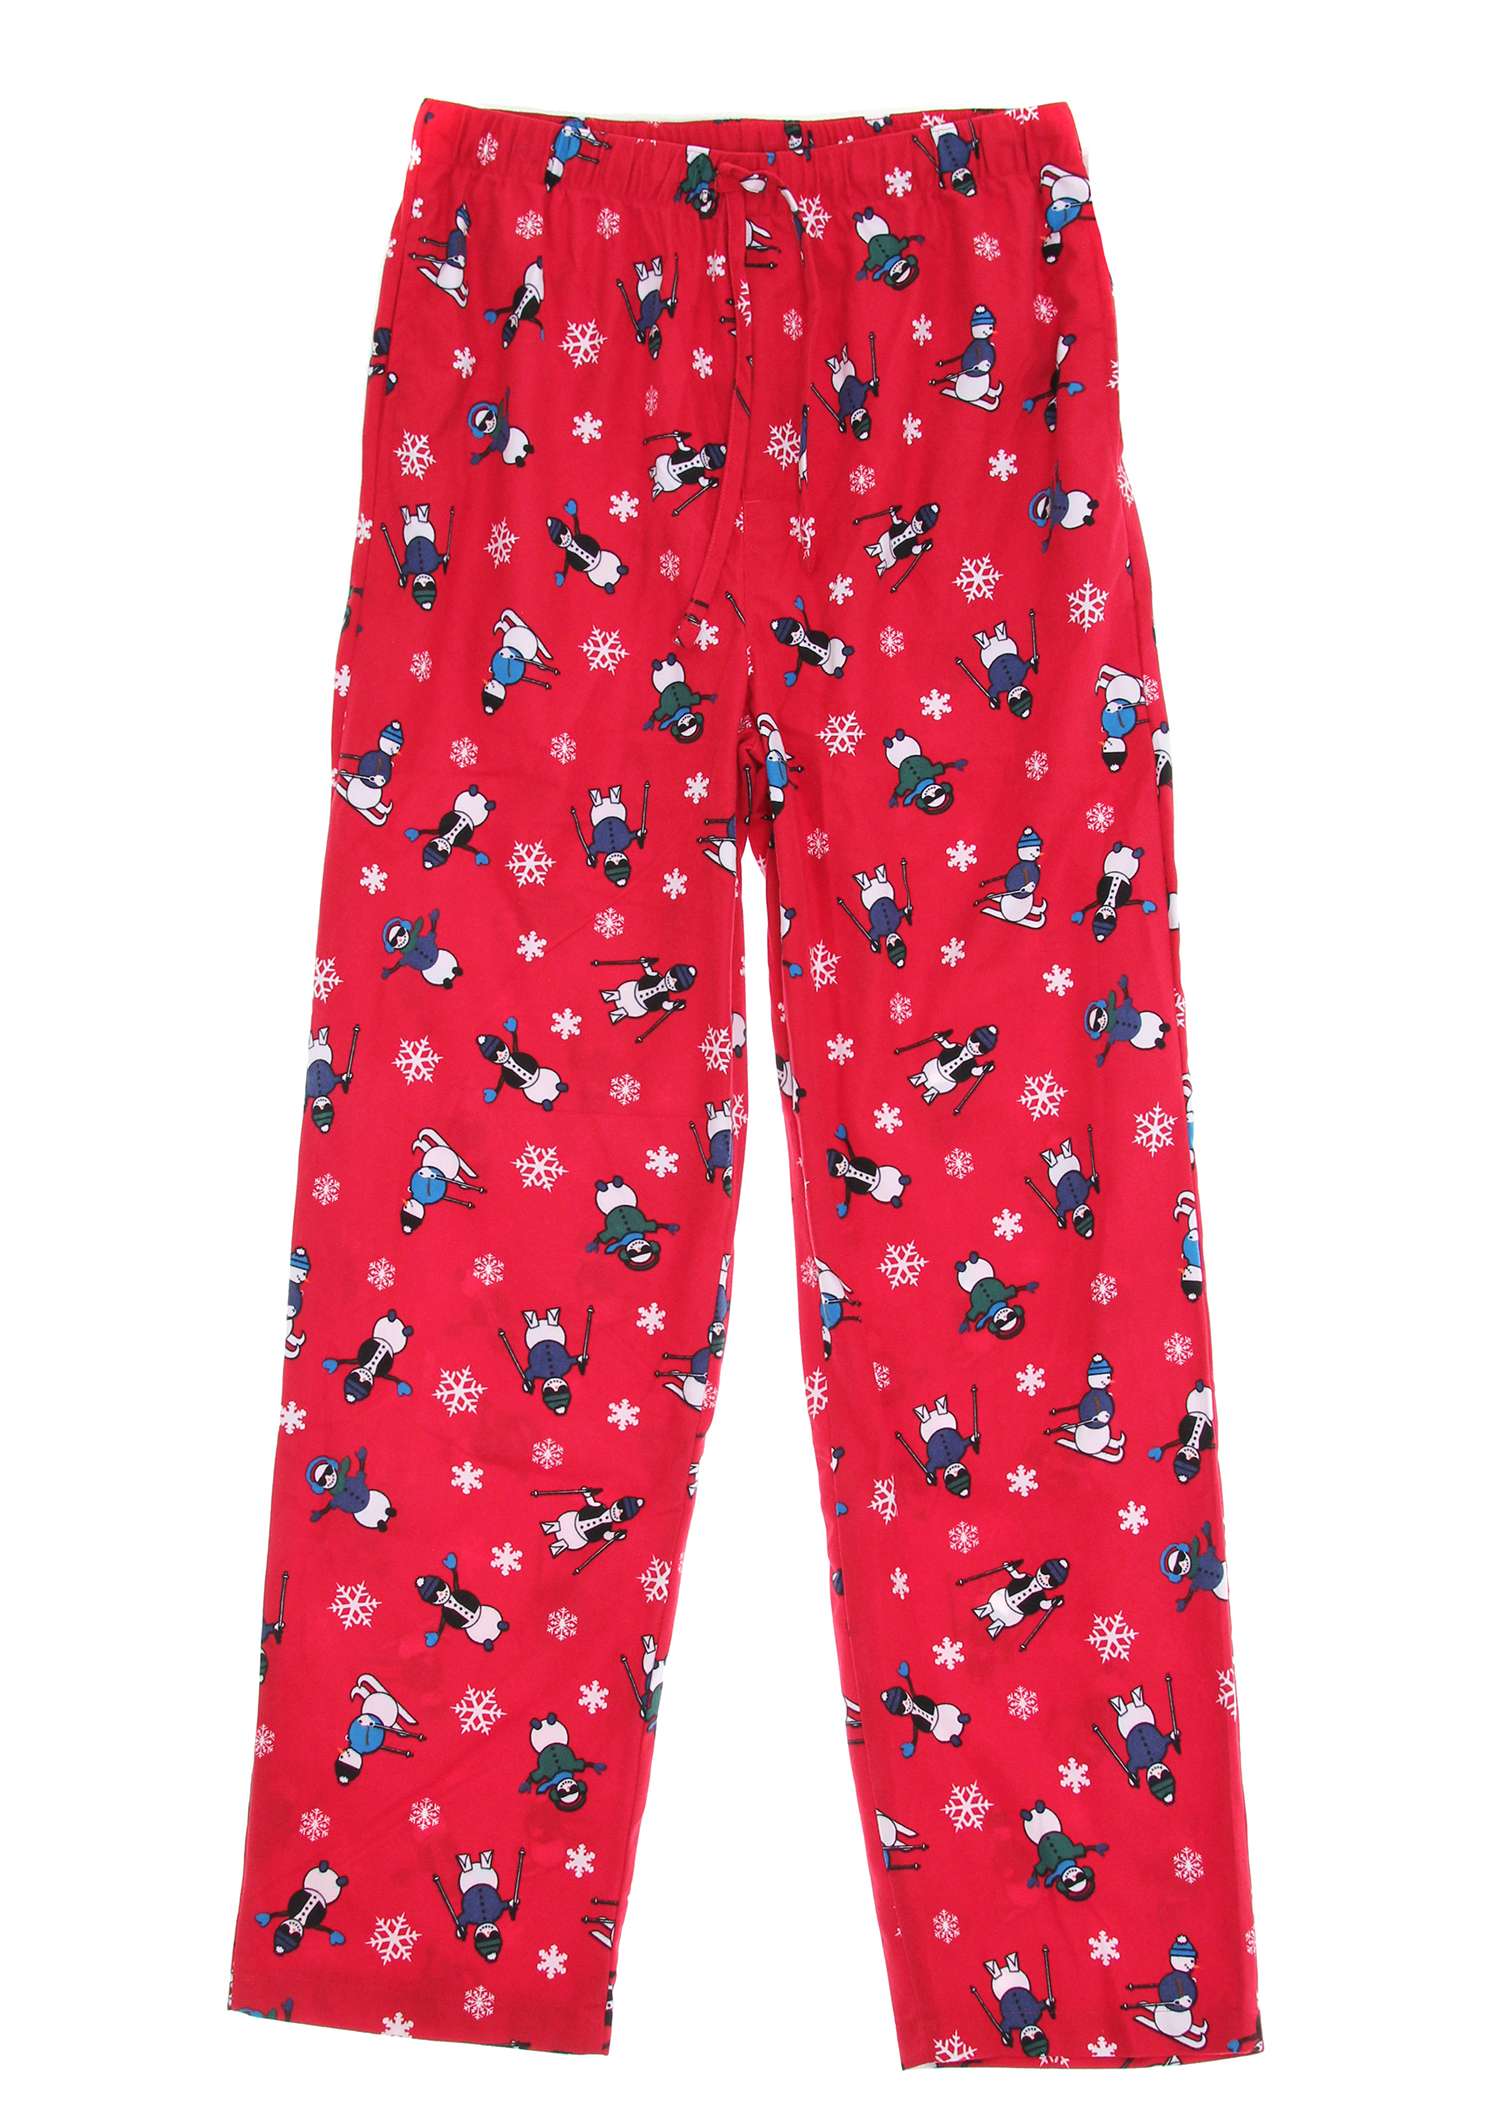 Club Room Men's Novelty Print Pajama Pants | eBay